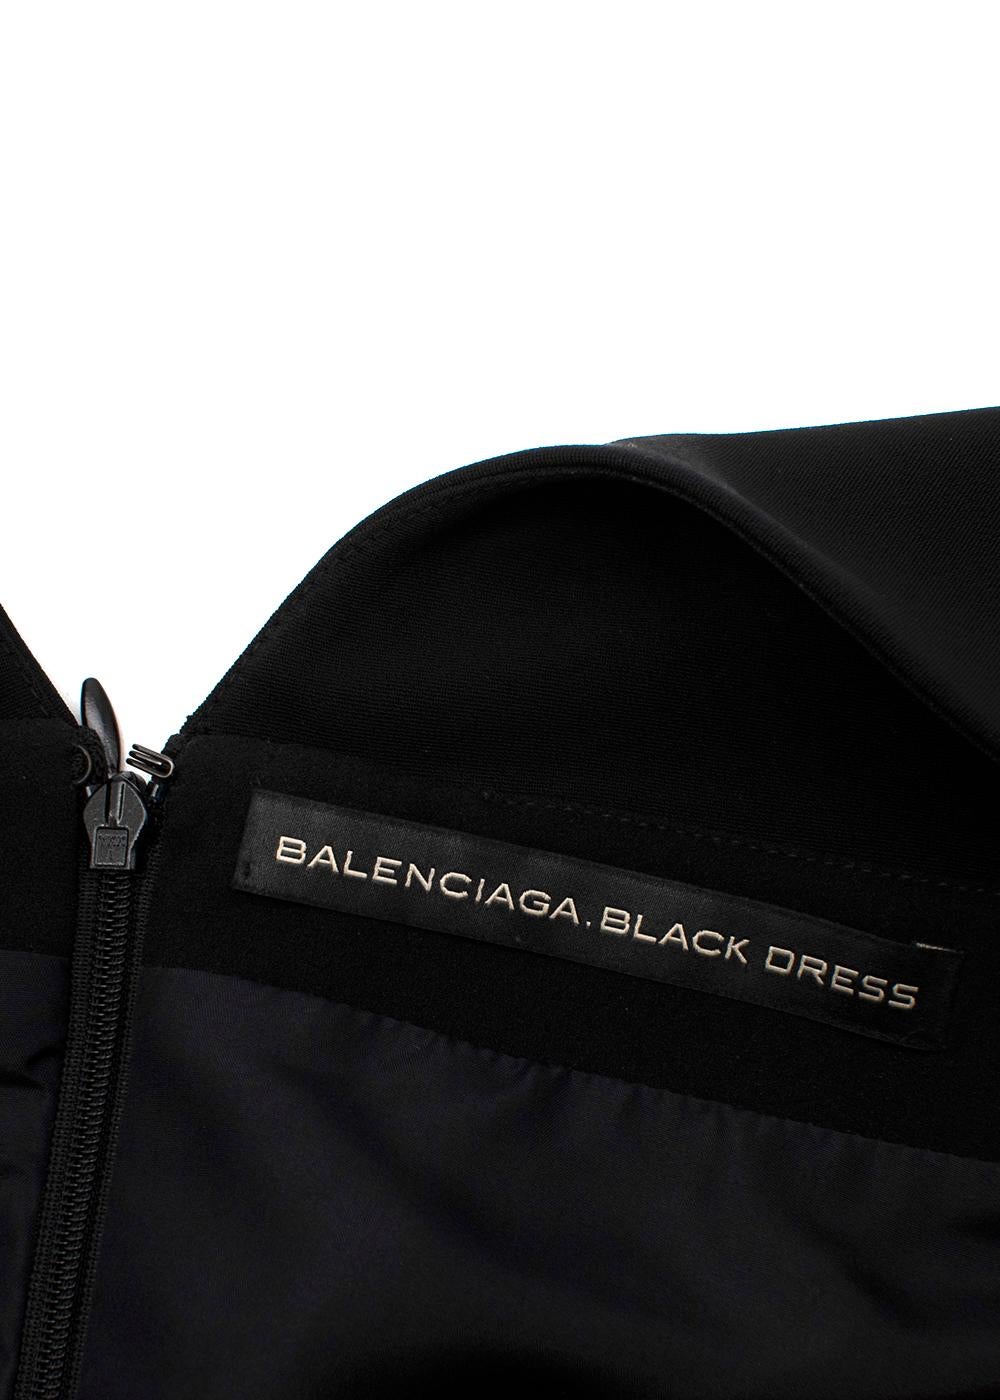 Women's Black Crepe V-Back Dress For Sale